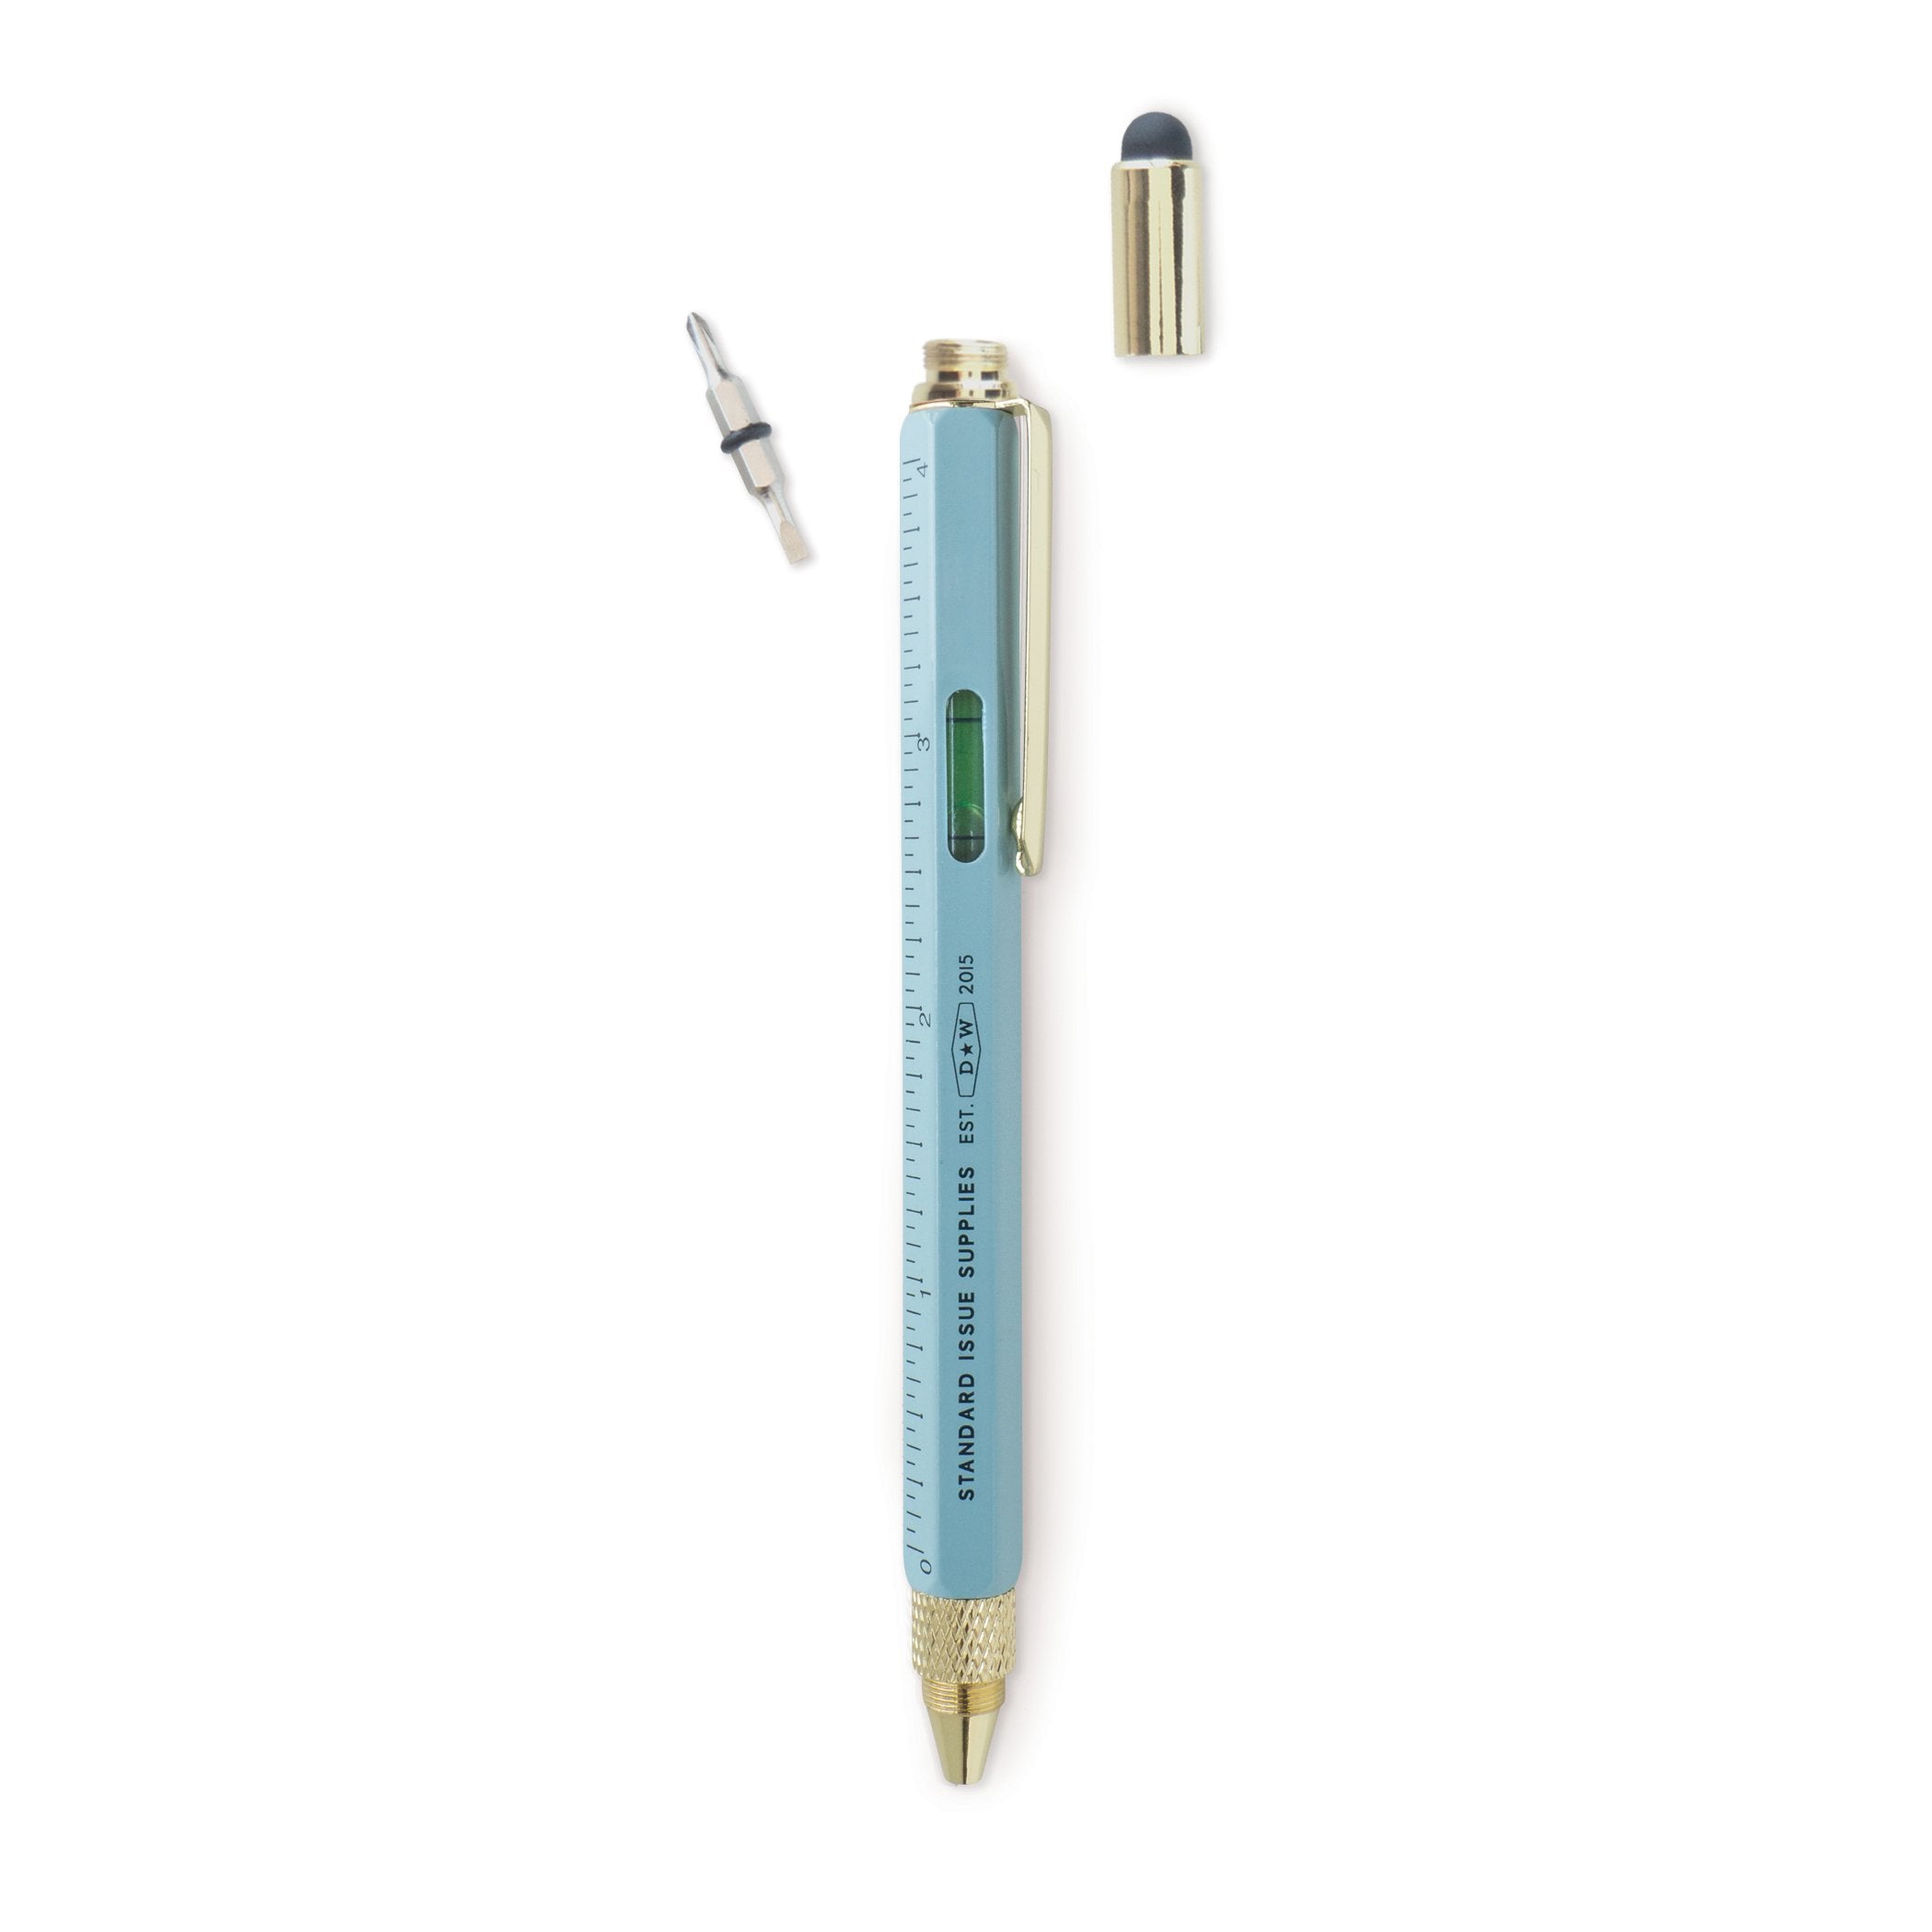 Pix Multi Tool - Standard Issue Tool Pen - Blue | DesignWorks Ink image2